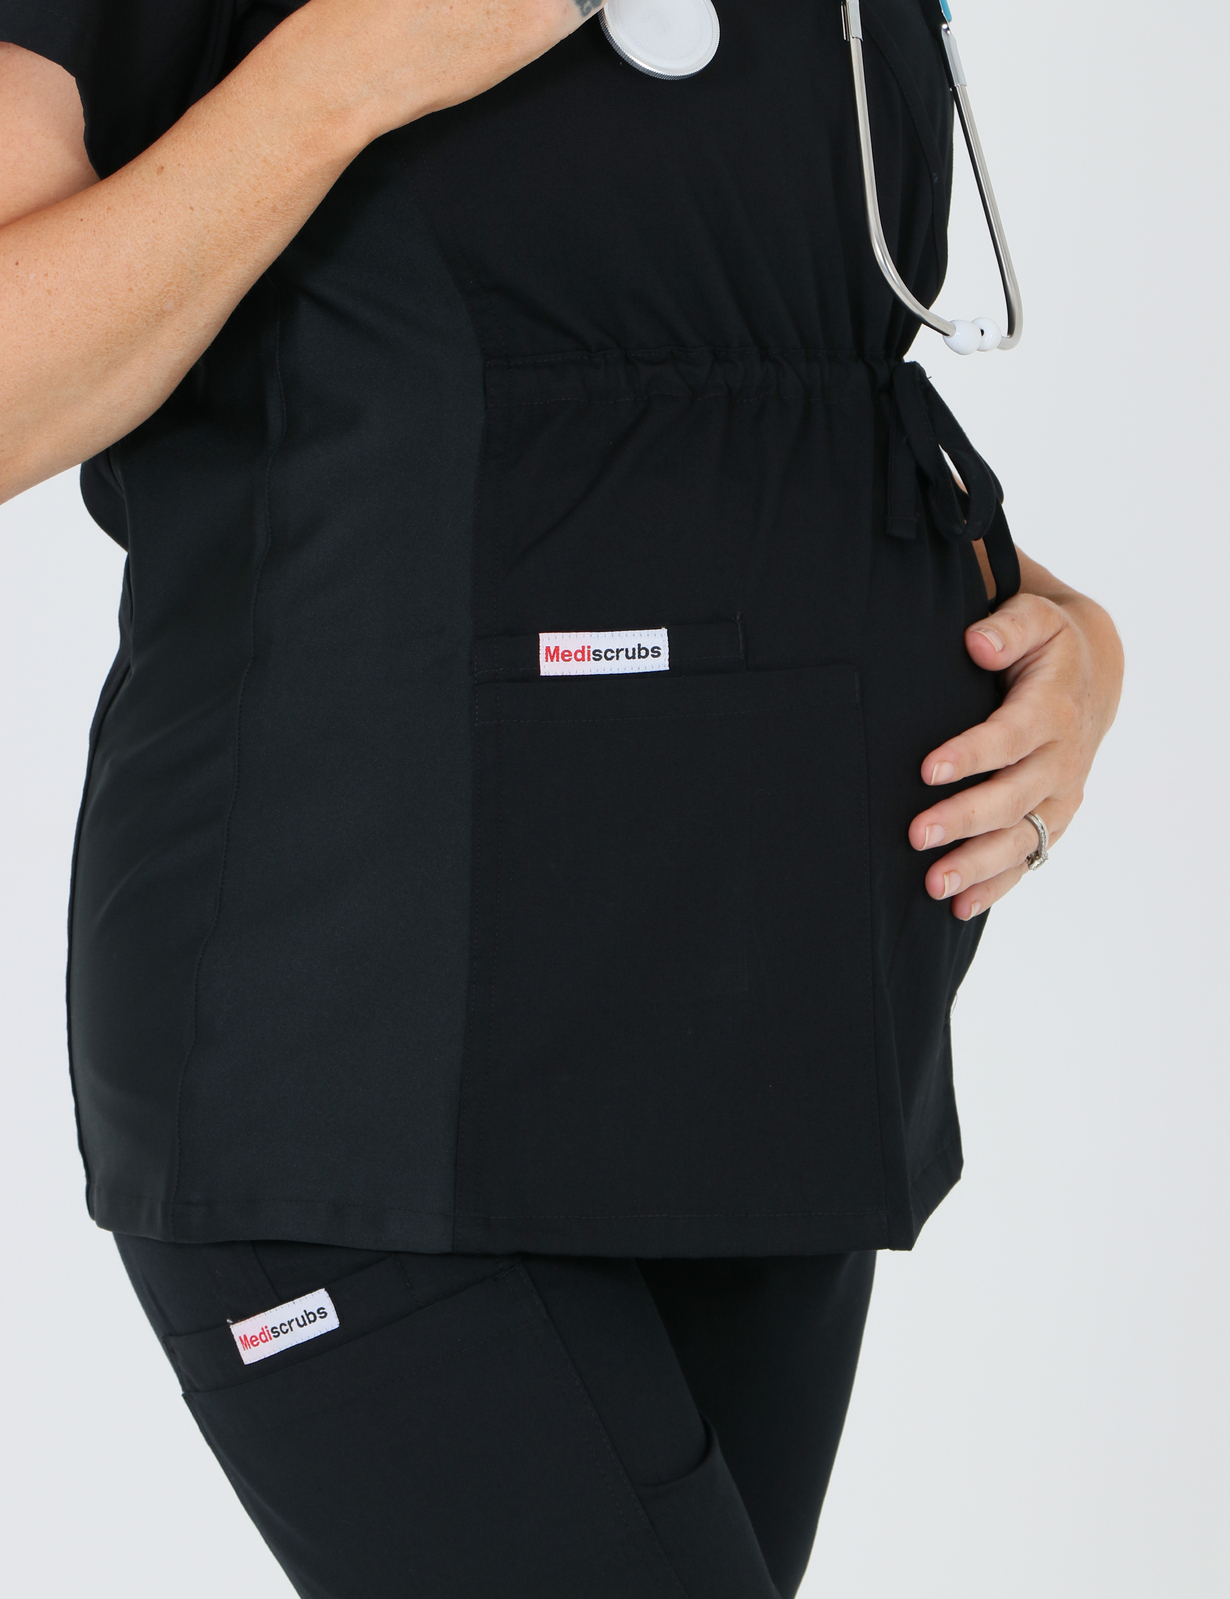 North Shore Private Hospital Nuclear Medicine Technician Uniform Top Only Bundle ( Maternity Spandex Scrub Top in Black  + Logo)